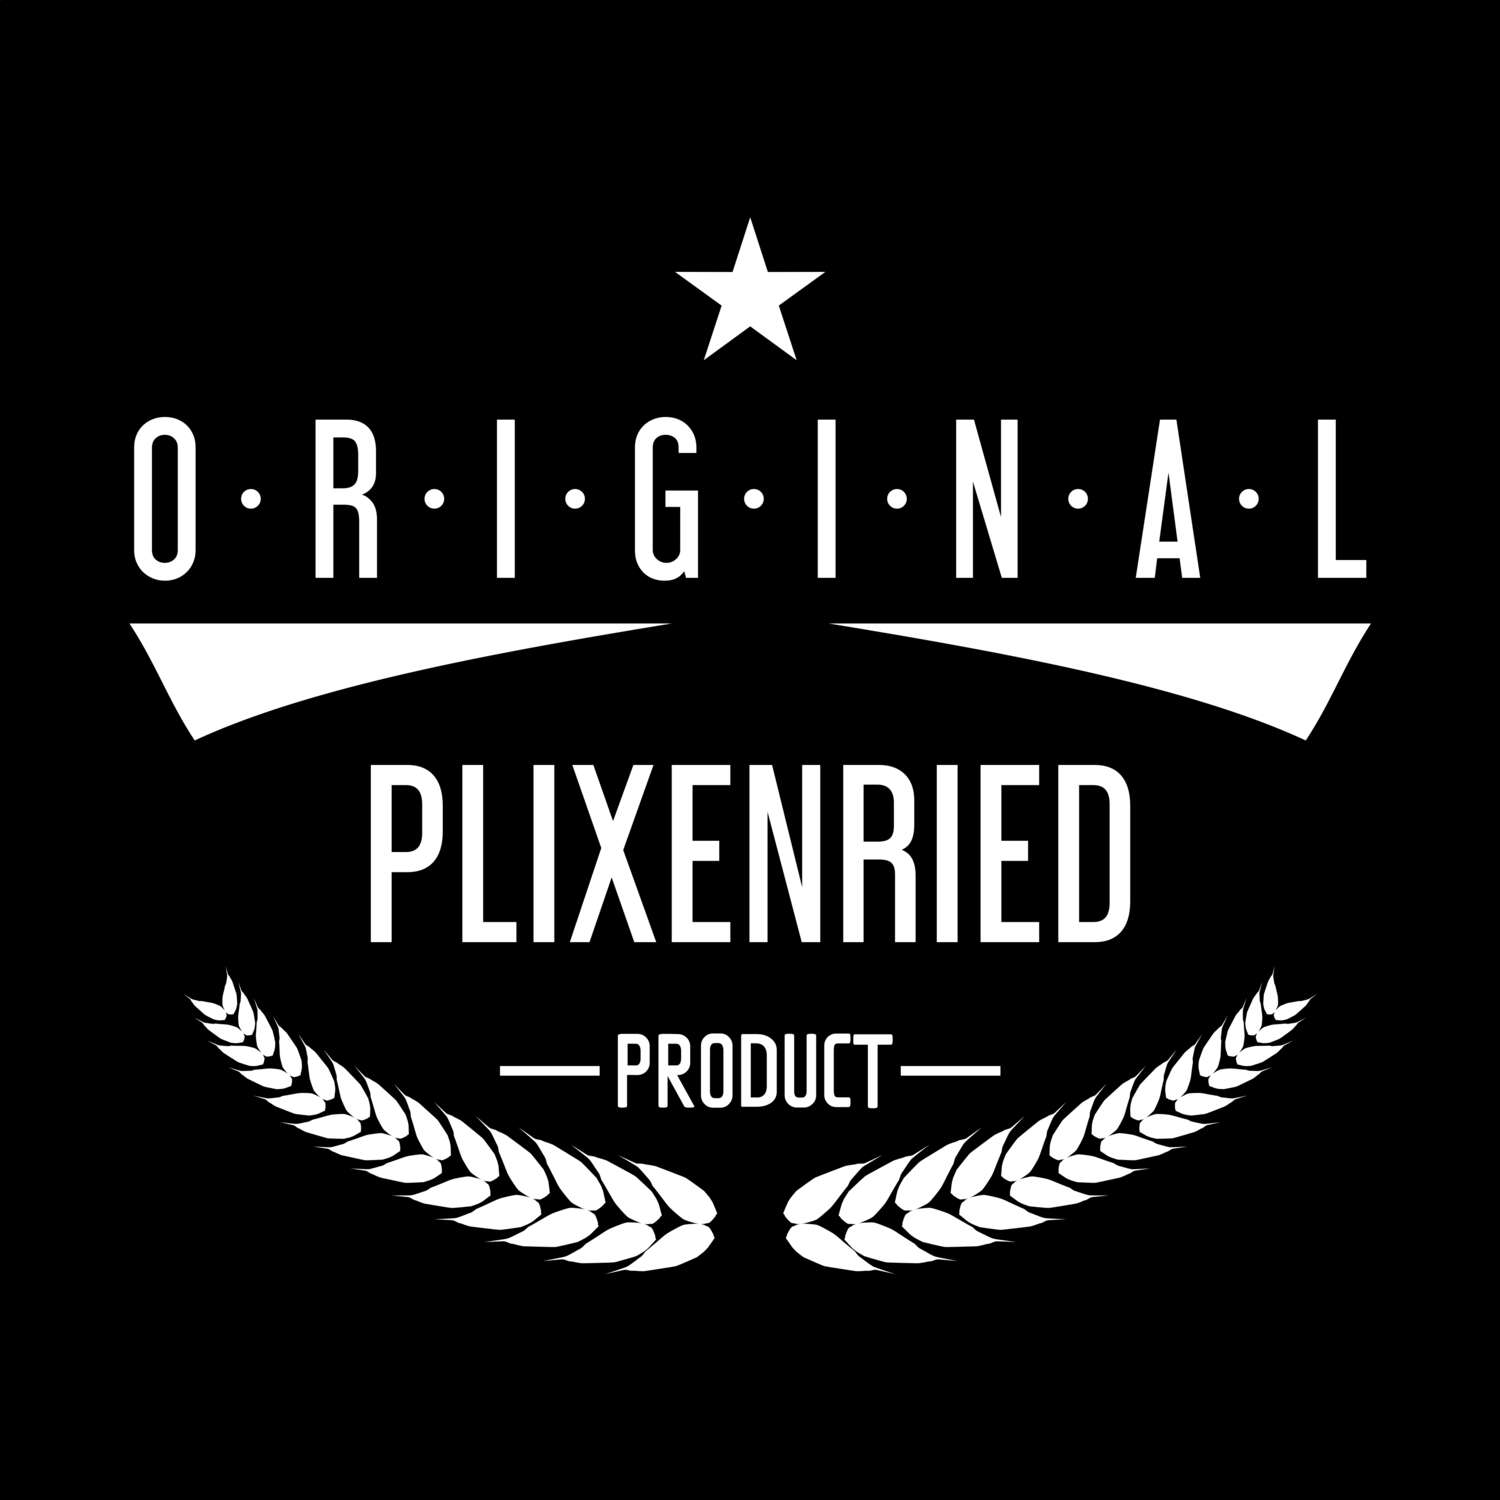 Plixenried T-Shirt »Original Product«